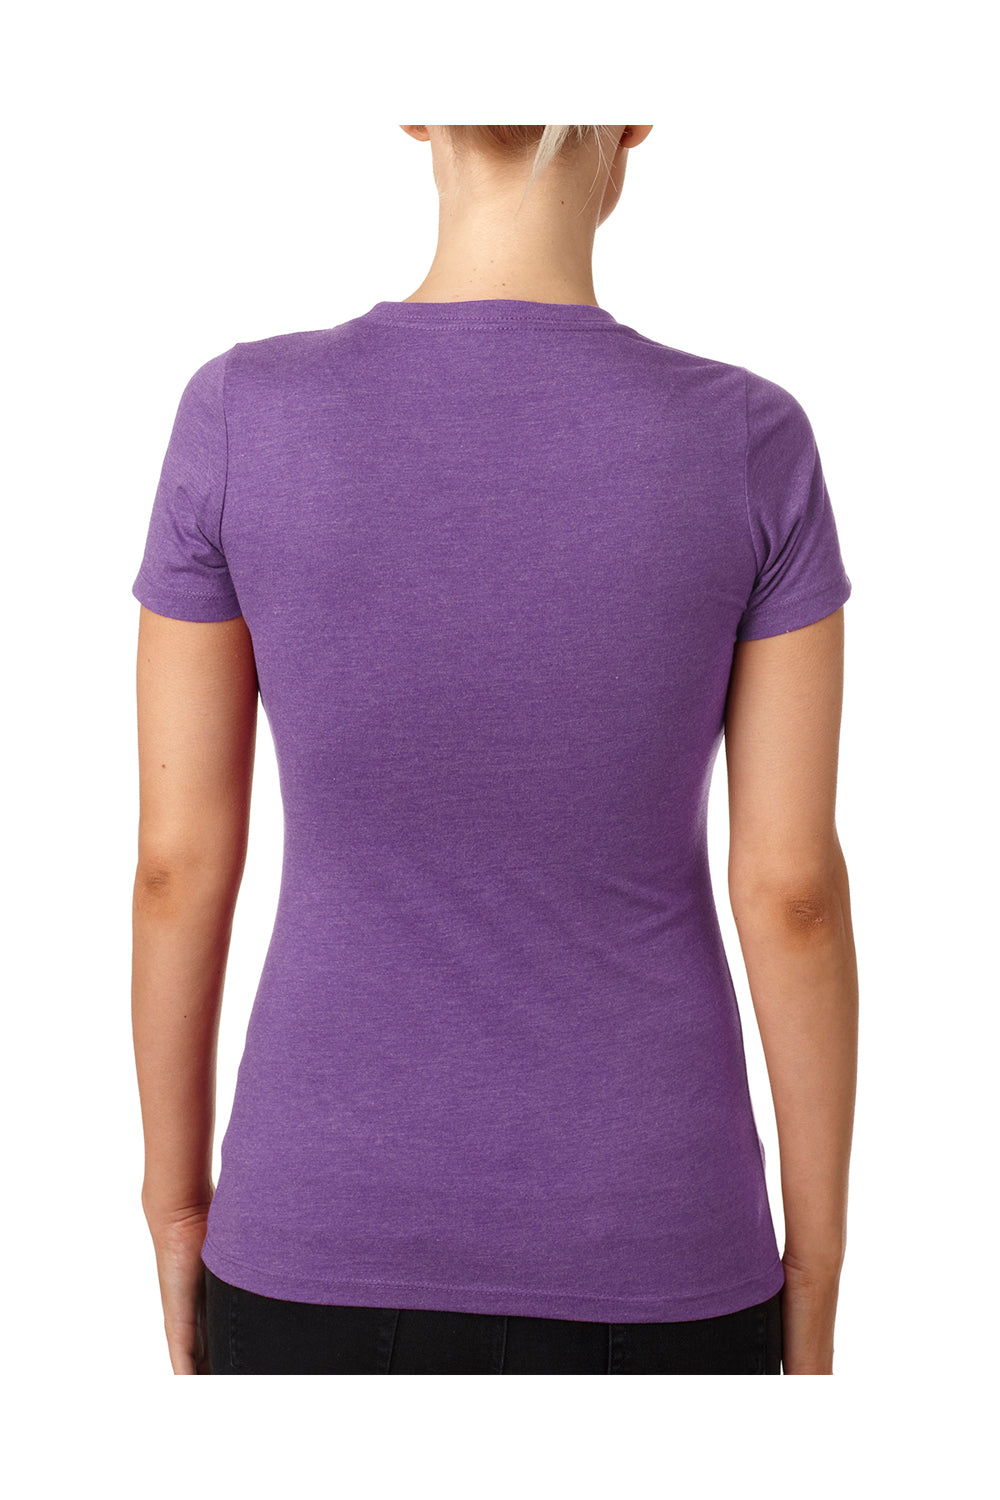 Next Level 6610 Womens CVC Jersey Short Sleeve Crewneck T-Shirt Purple Berry Back